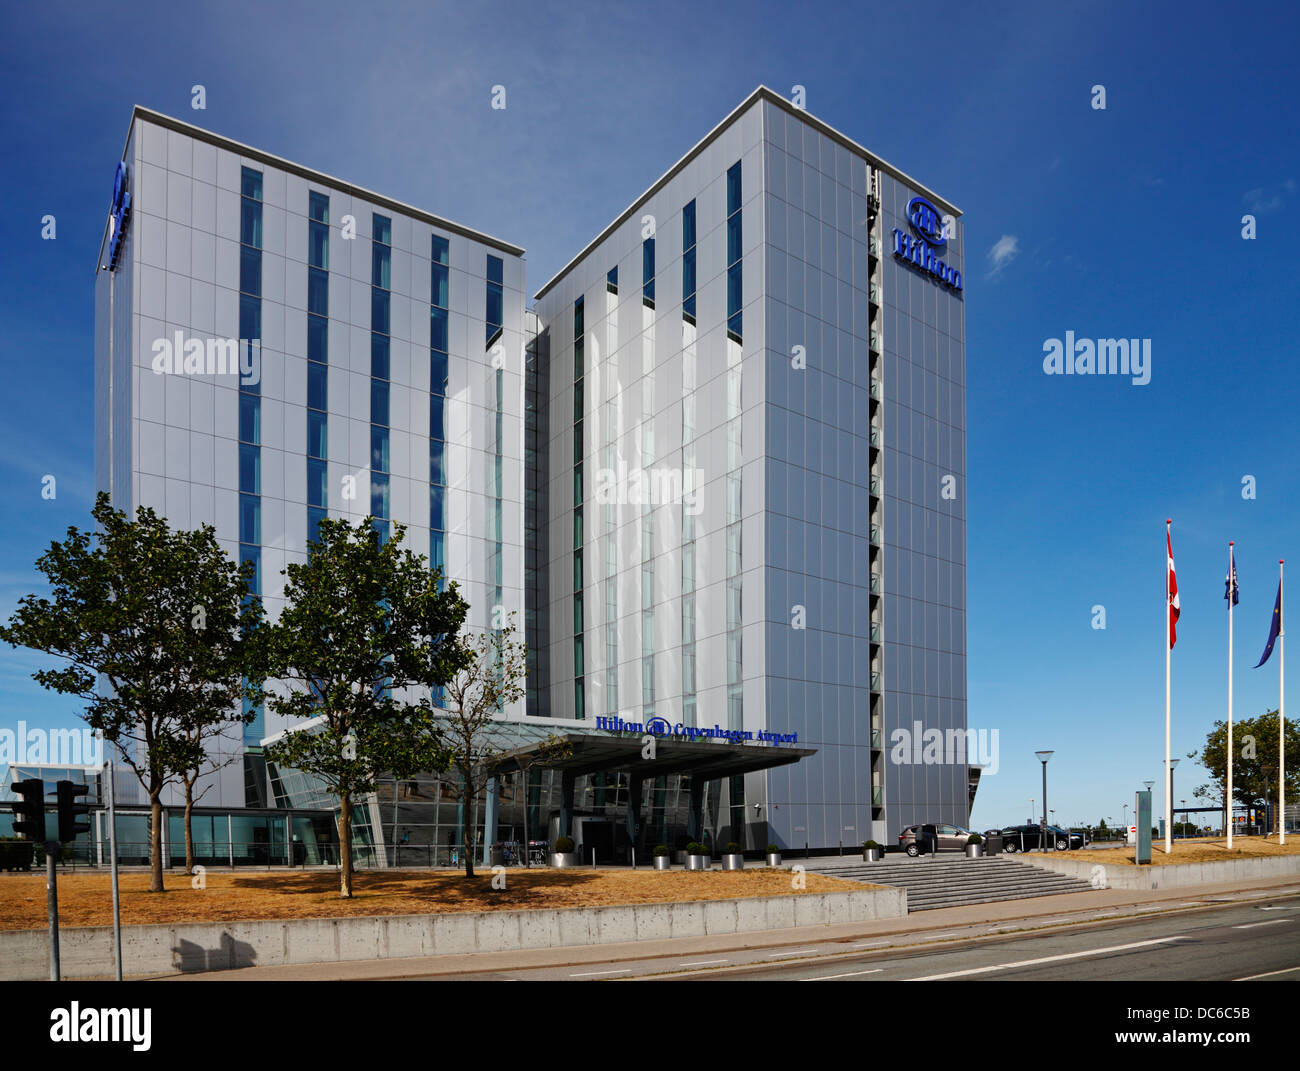 The Hilton hotel at the airport in Copenhagen, Denmark Stock Photo